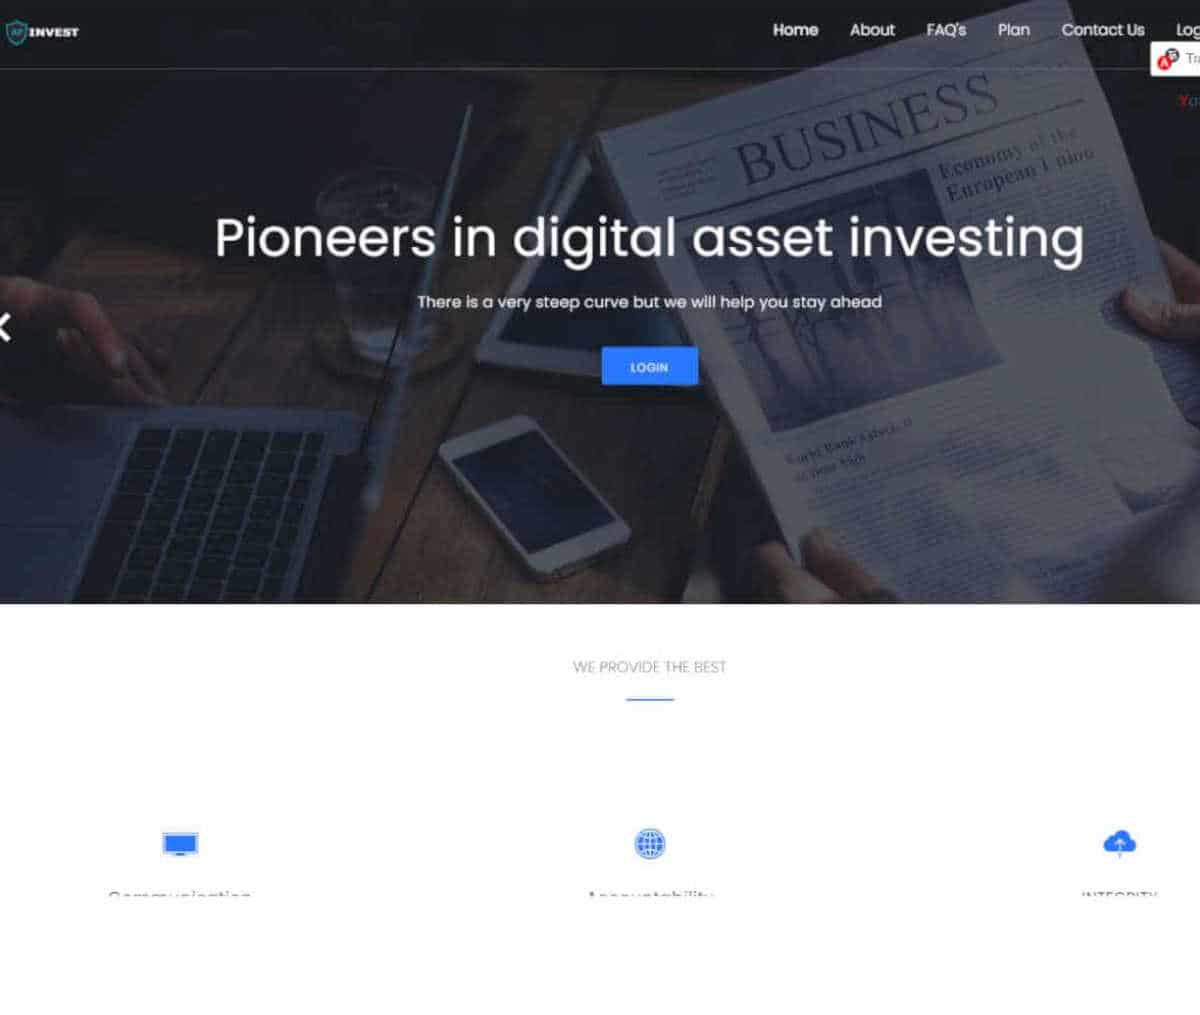 Página web de Afinvest.net